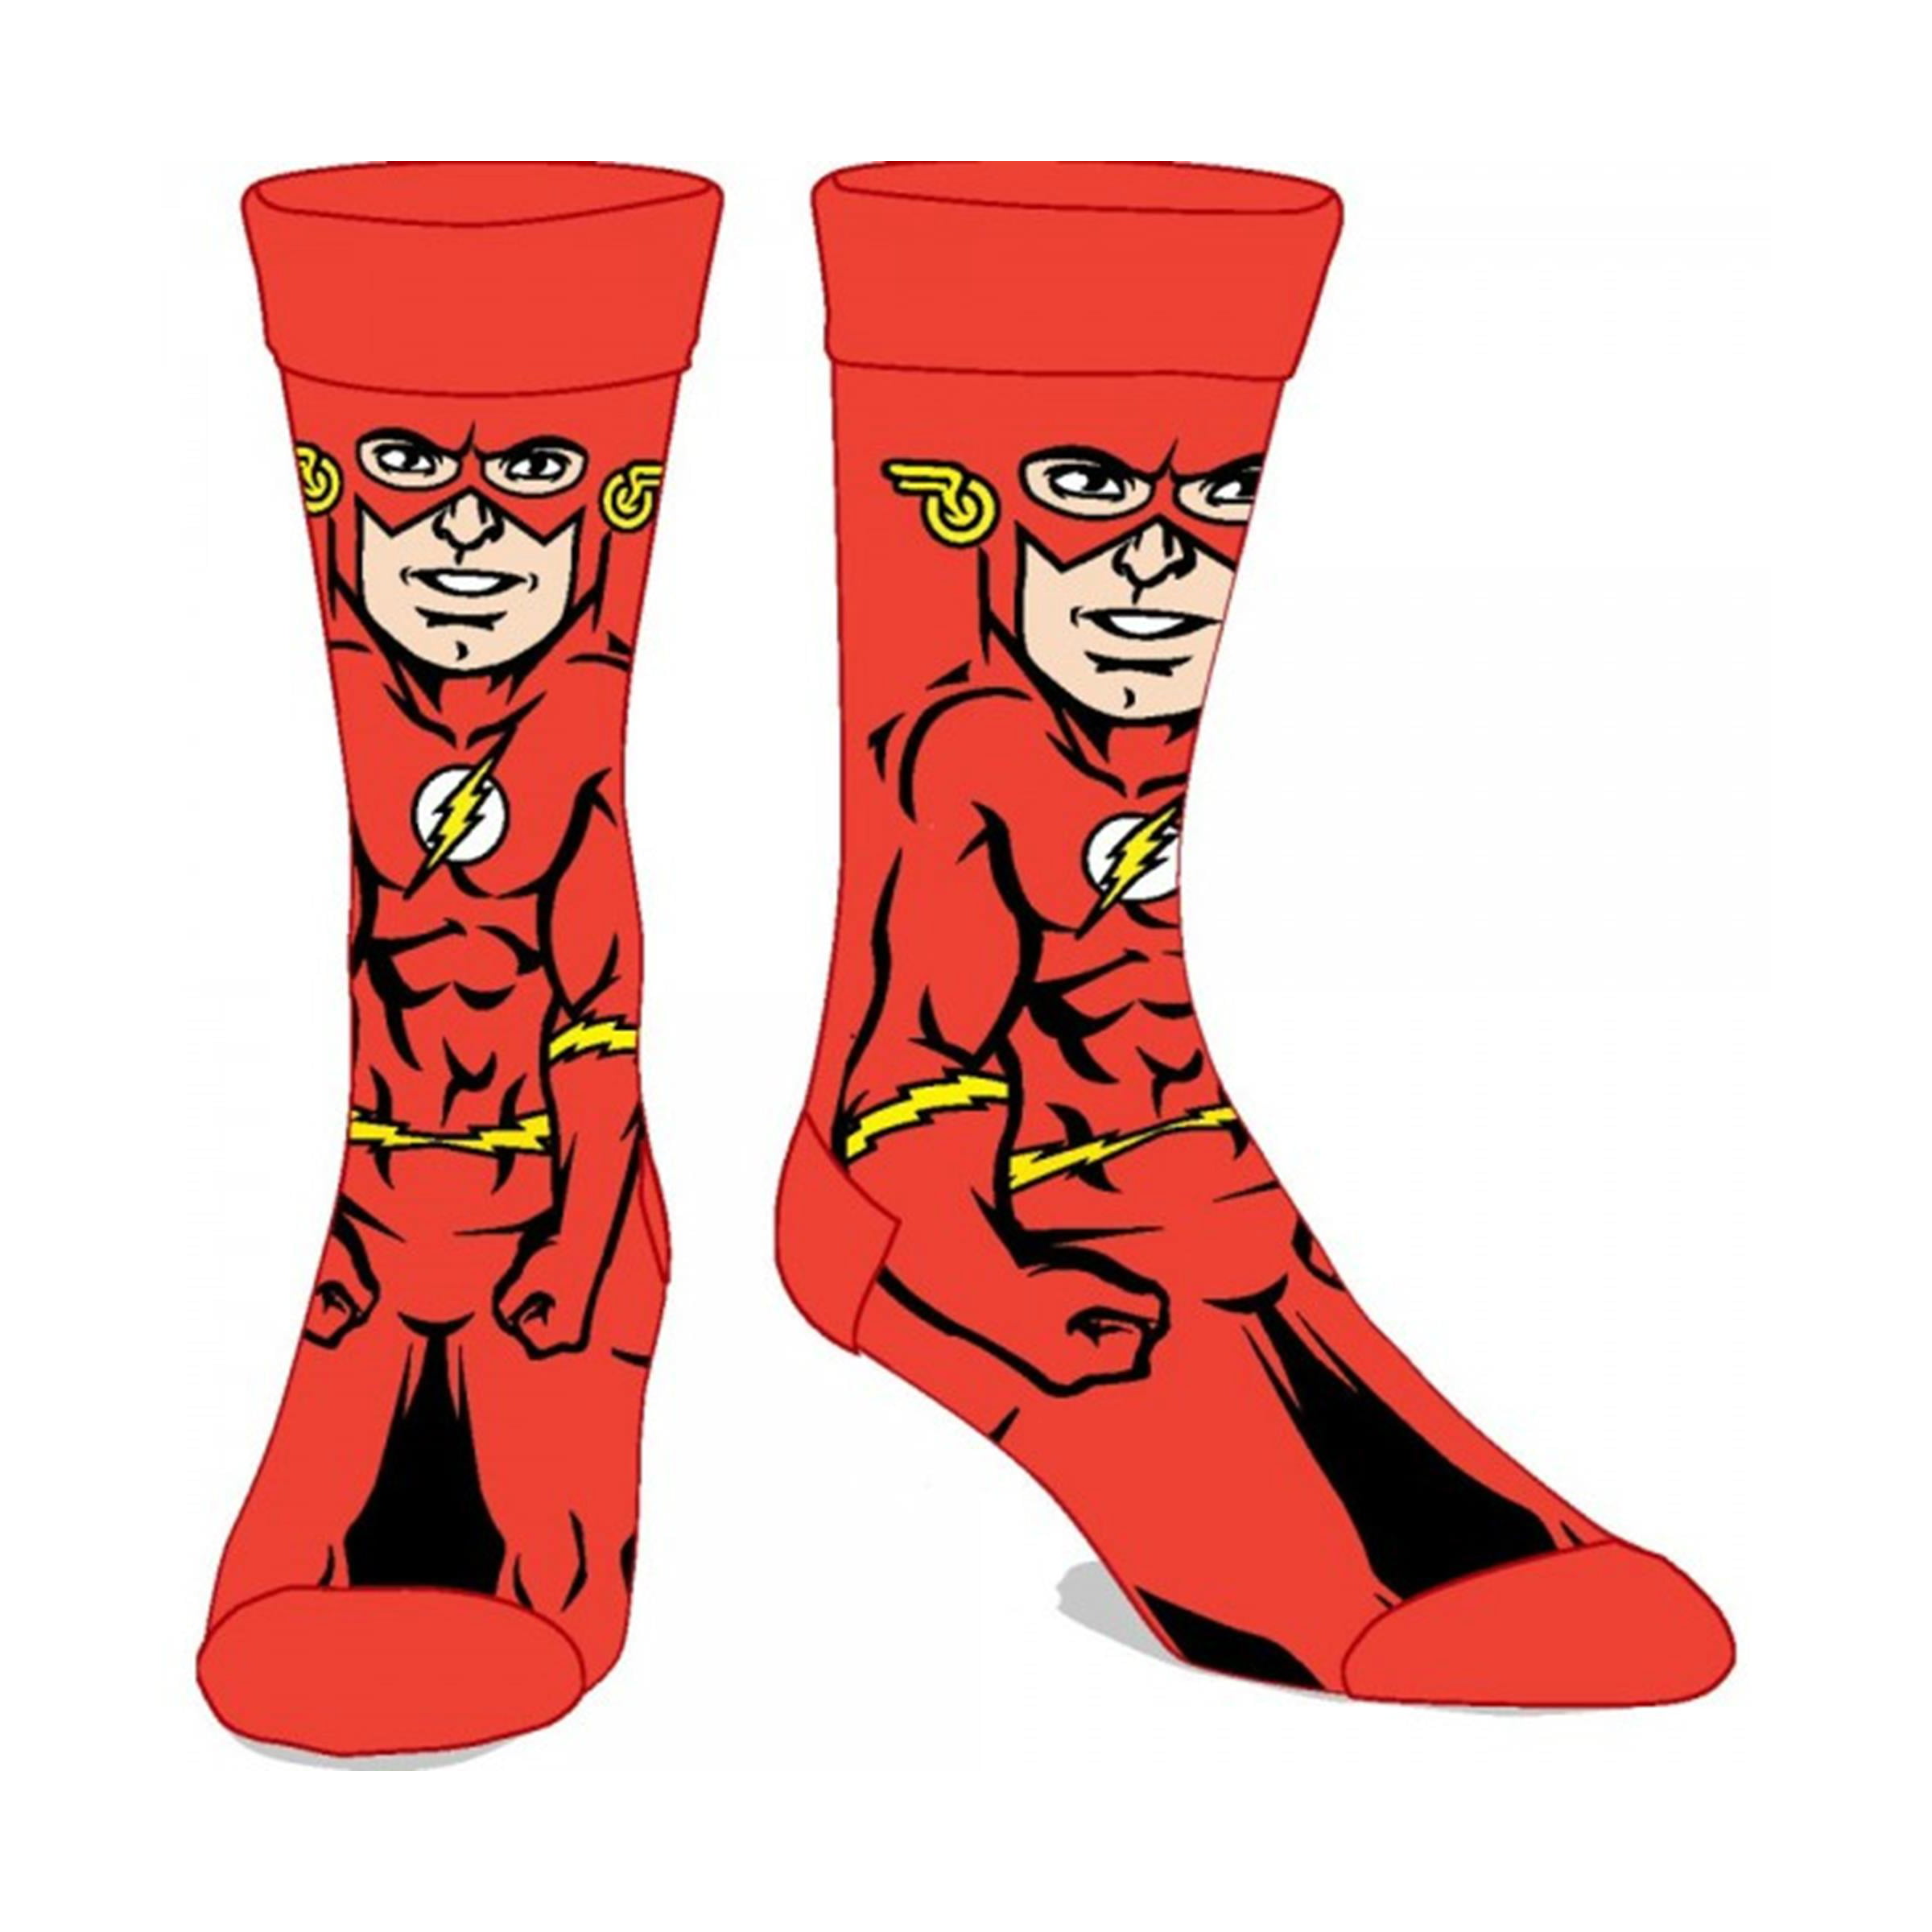 Flash socks